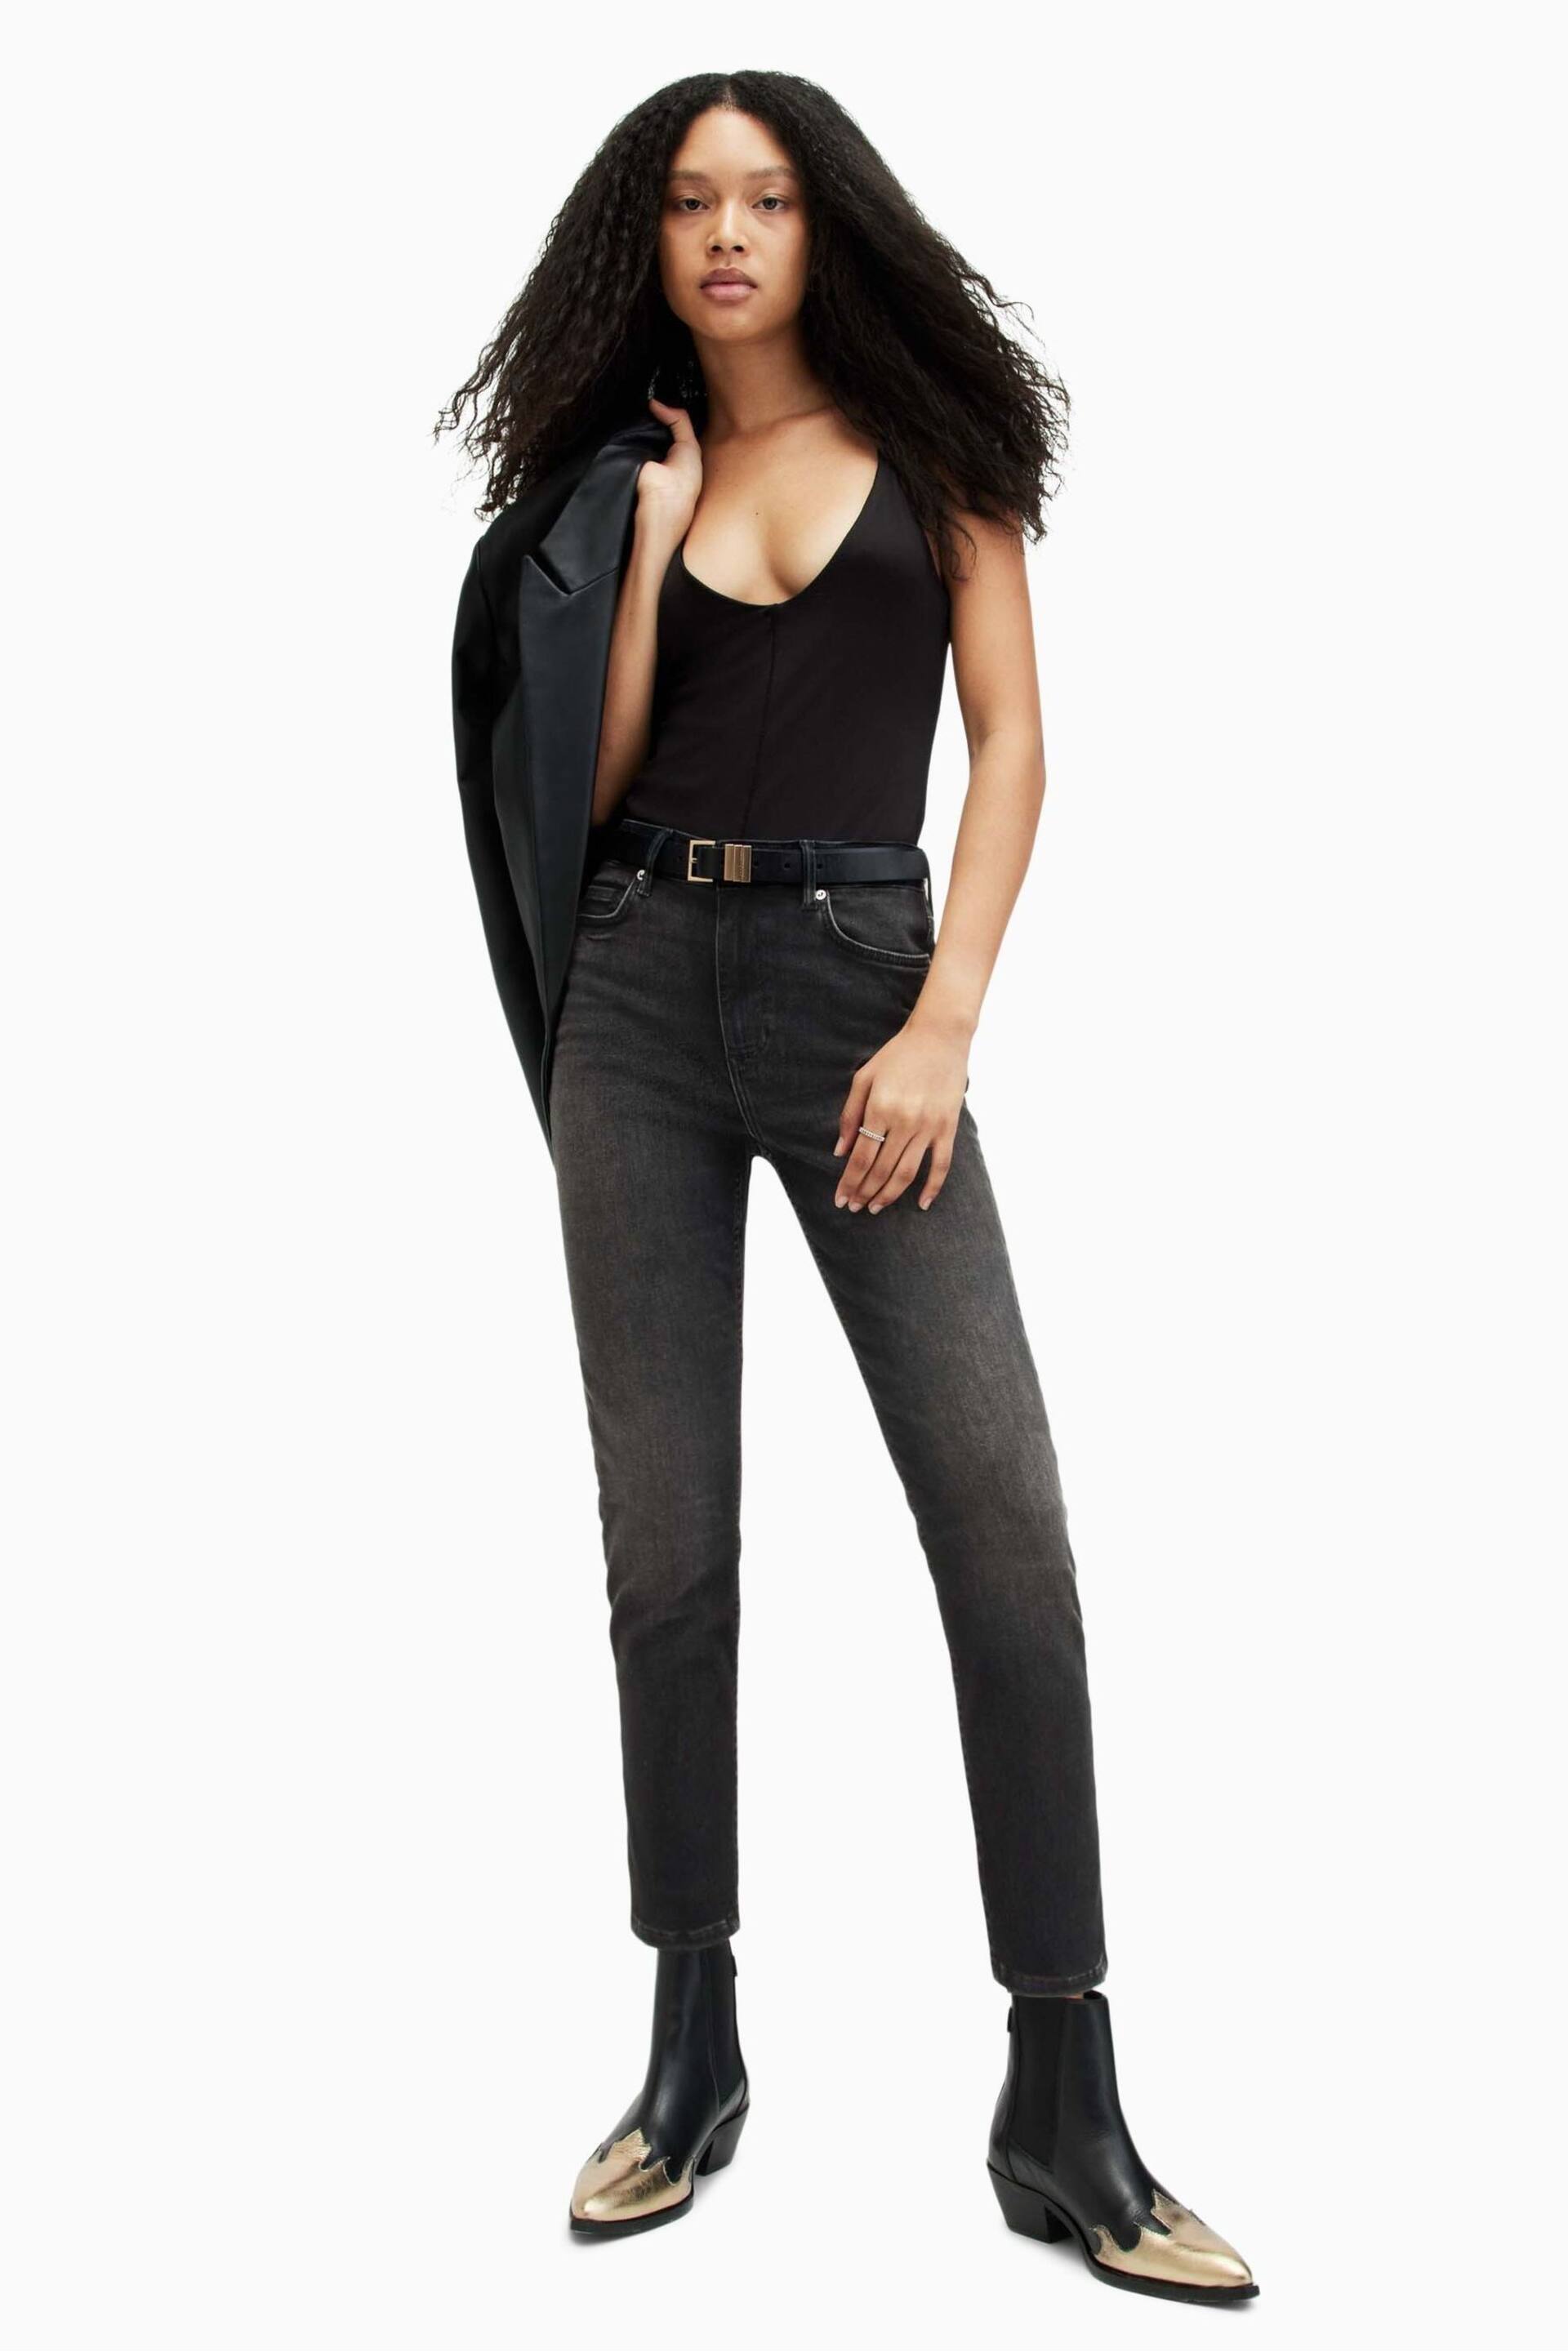 AllSaints Black Dax Vanta Sizeme Jeans - Image 2 of 7